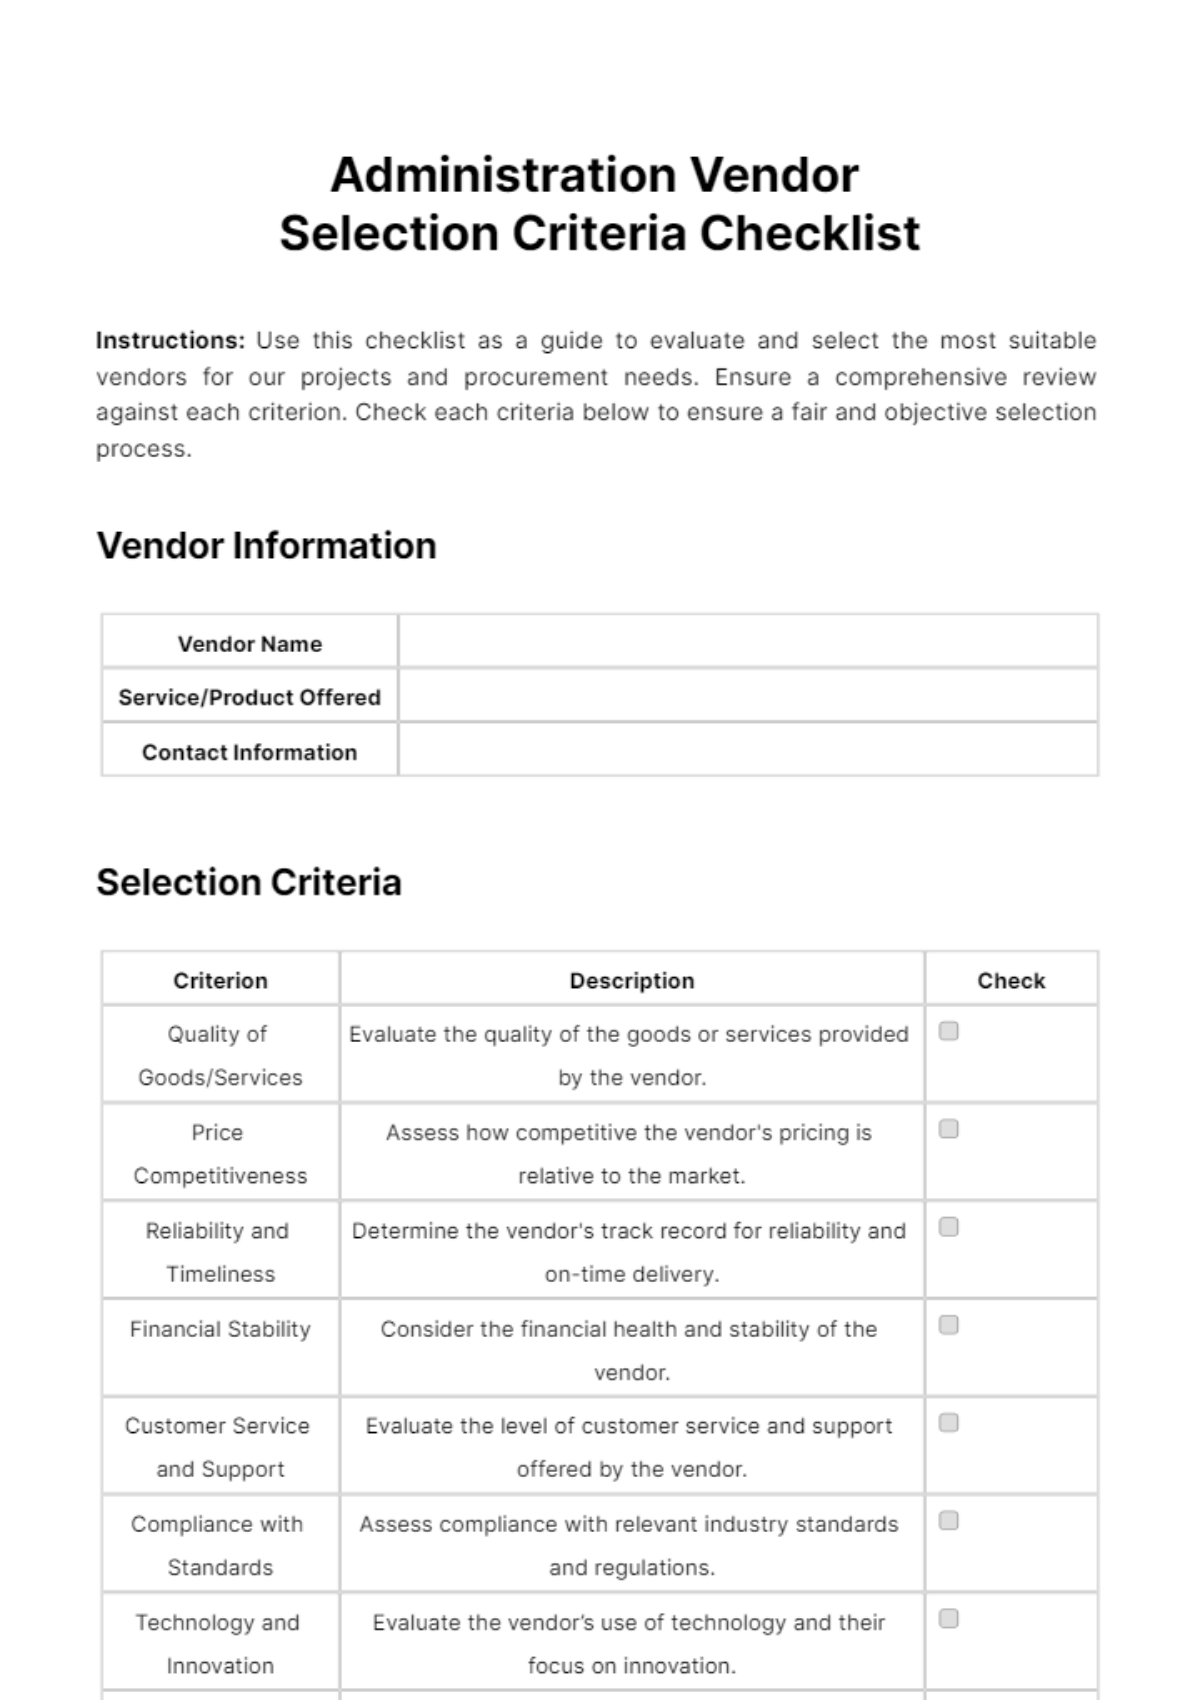 Free Administration Vendor Selection Criteria Checklist Template